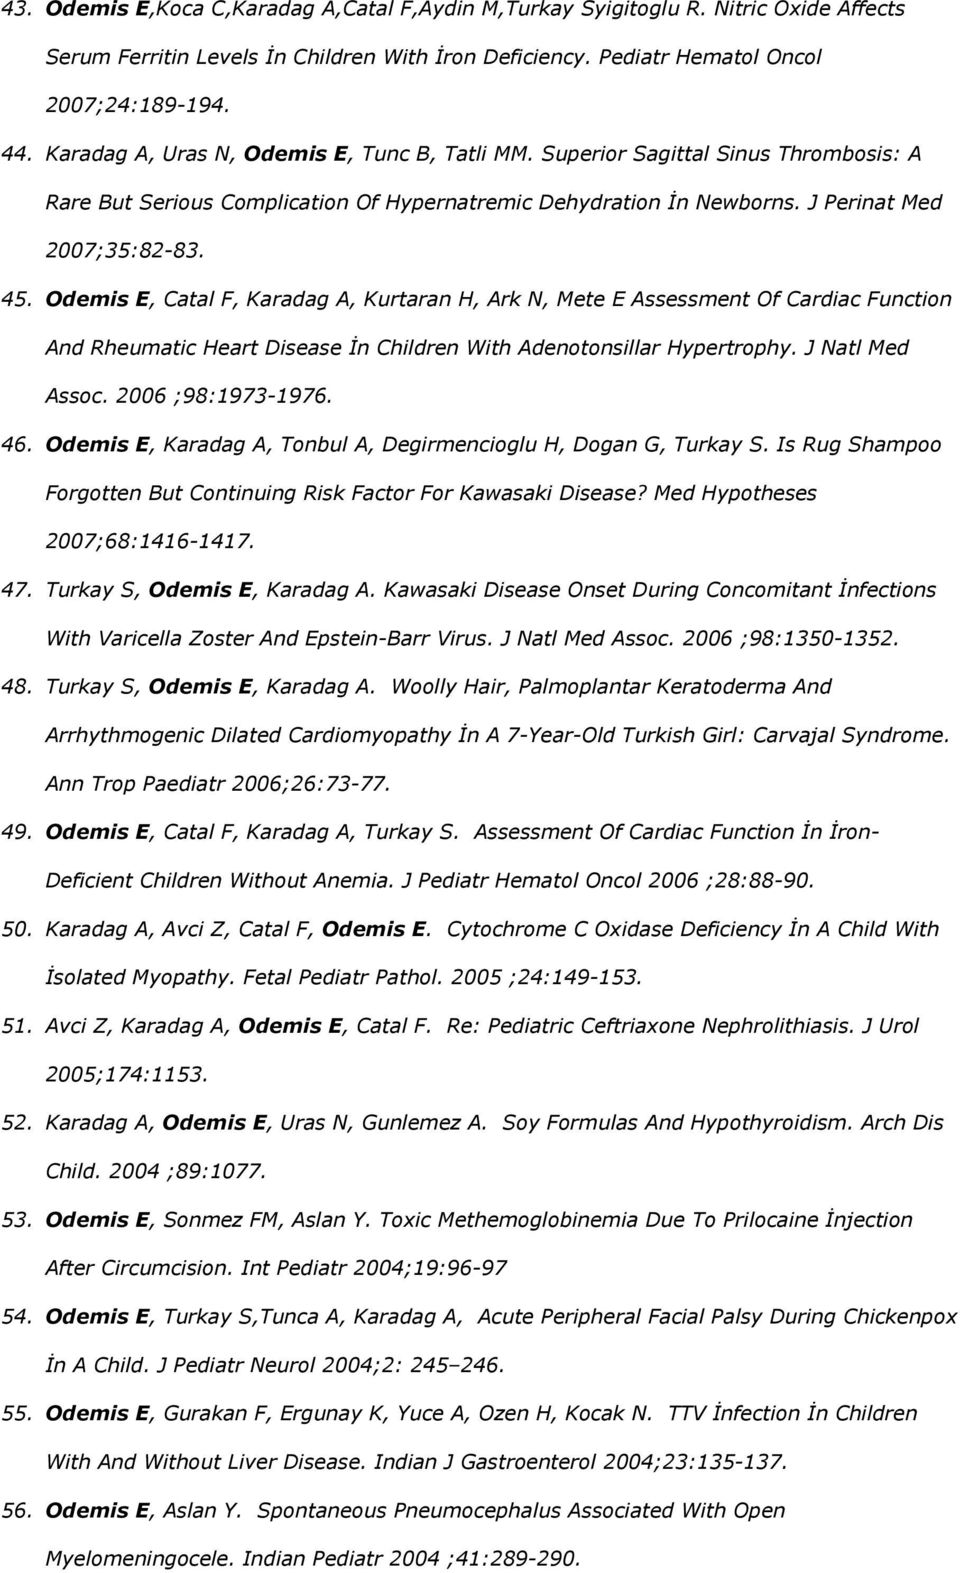 Odemis E, Catal F, Karadag A, Kurtaran H, Ark N, Mete E Assessment Of Cardiac Function And Rheumatic Heart Disease İn Children With Adenotonsillar Hypertrophy. J Natl Med Assoc. 2006 ;98:1973-1976.